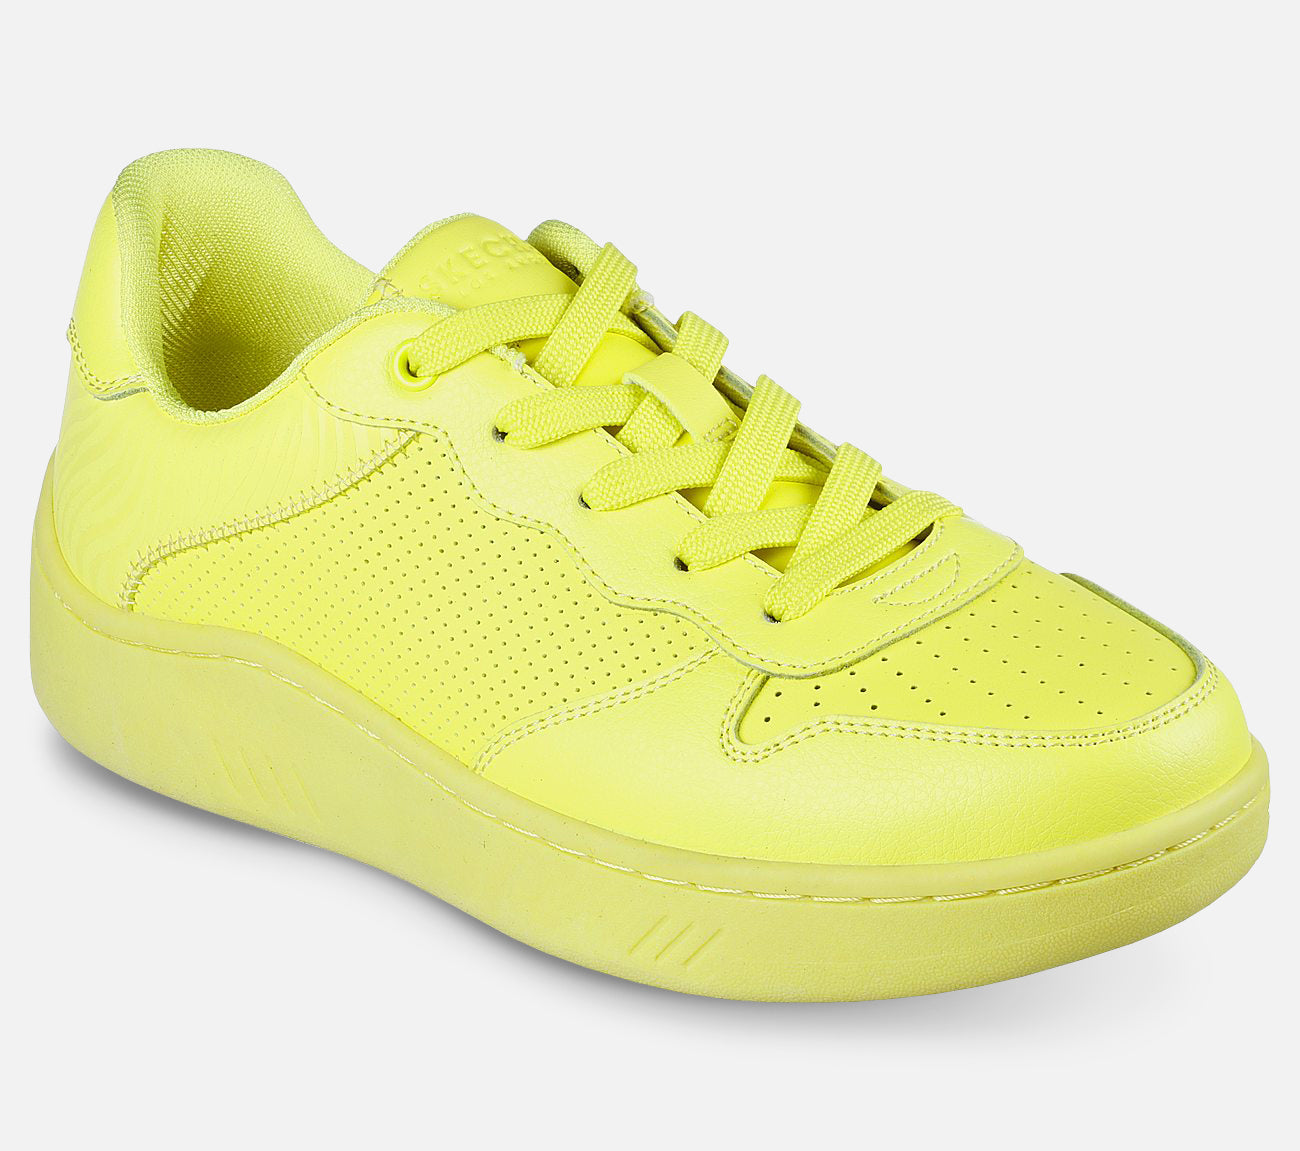 Upbeats - Bright Court Shoe Skechers